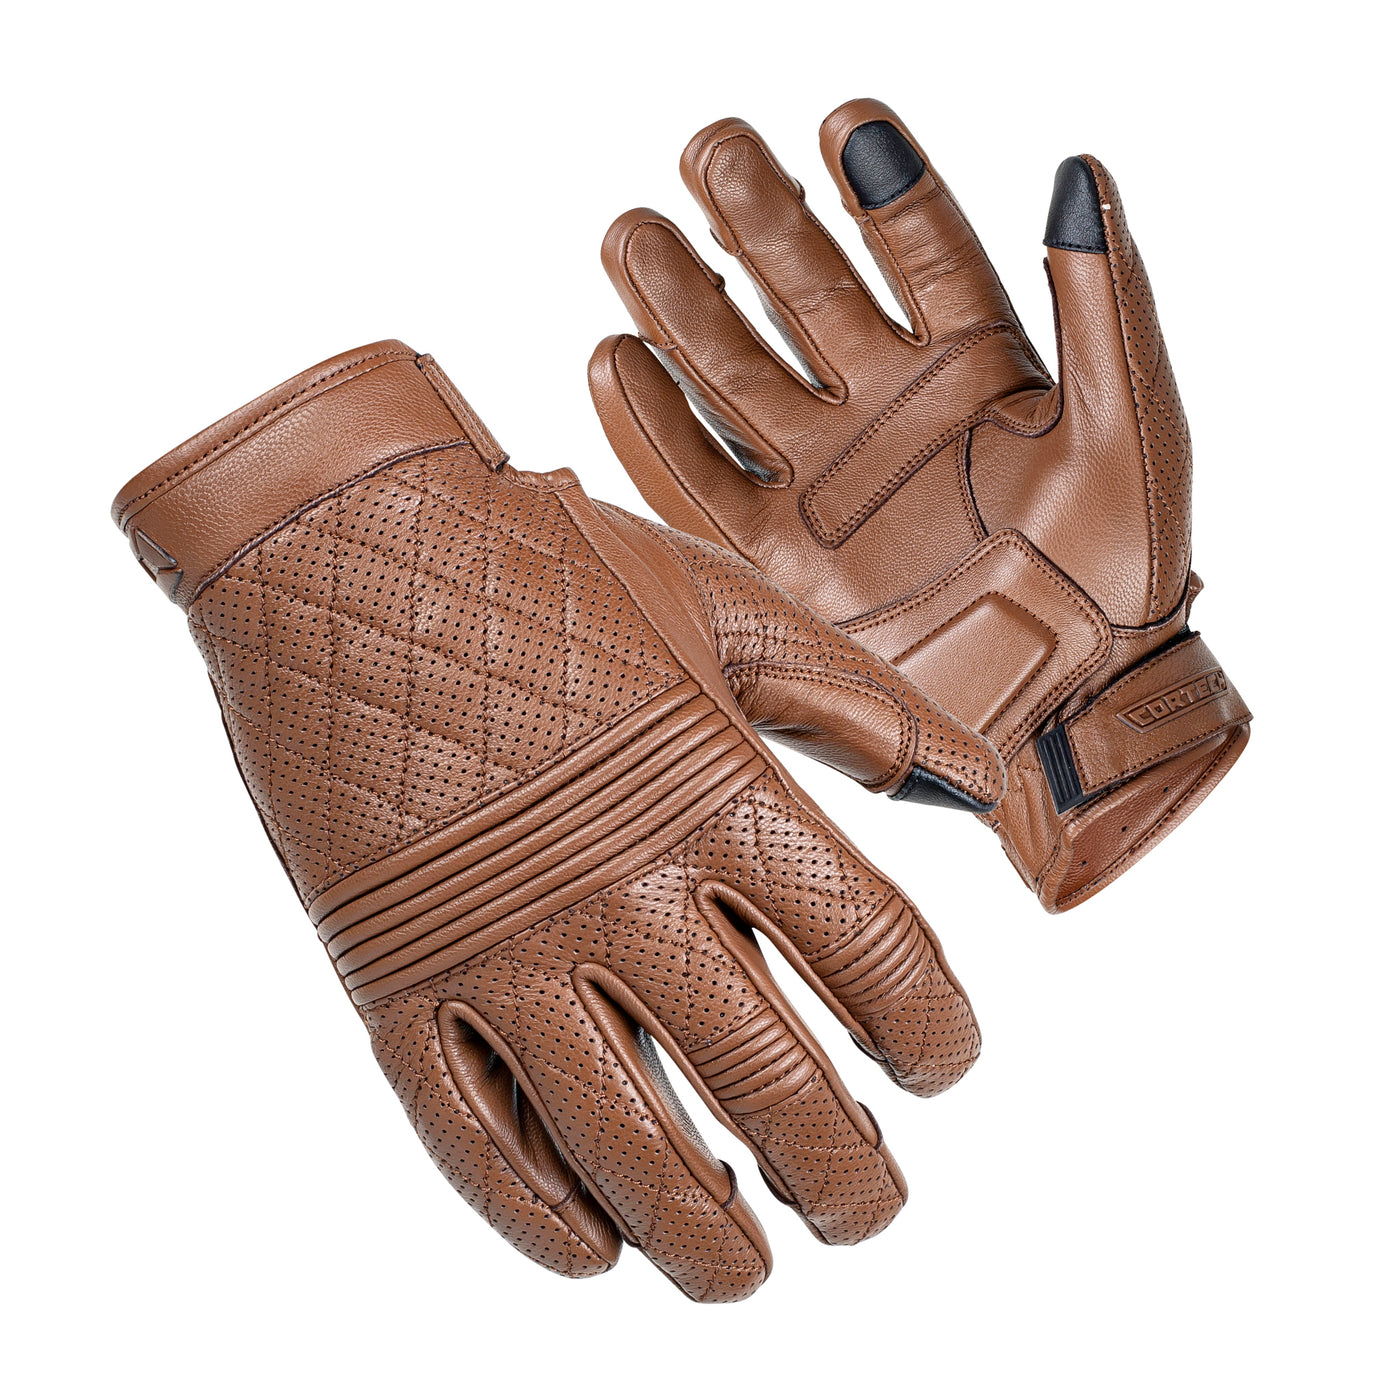 Cortech "The Scrapper" Short Cuff Men's Leather Gloves